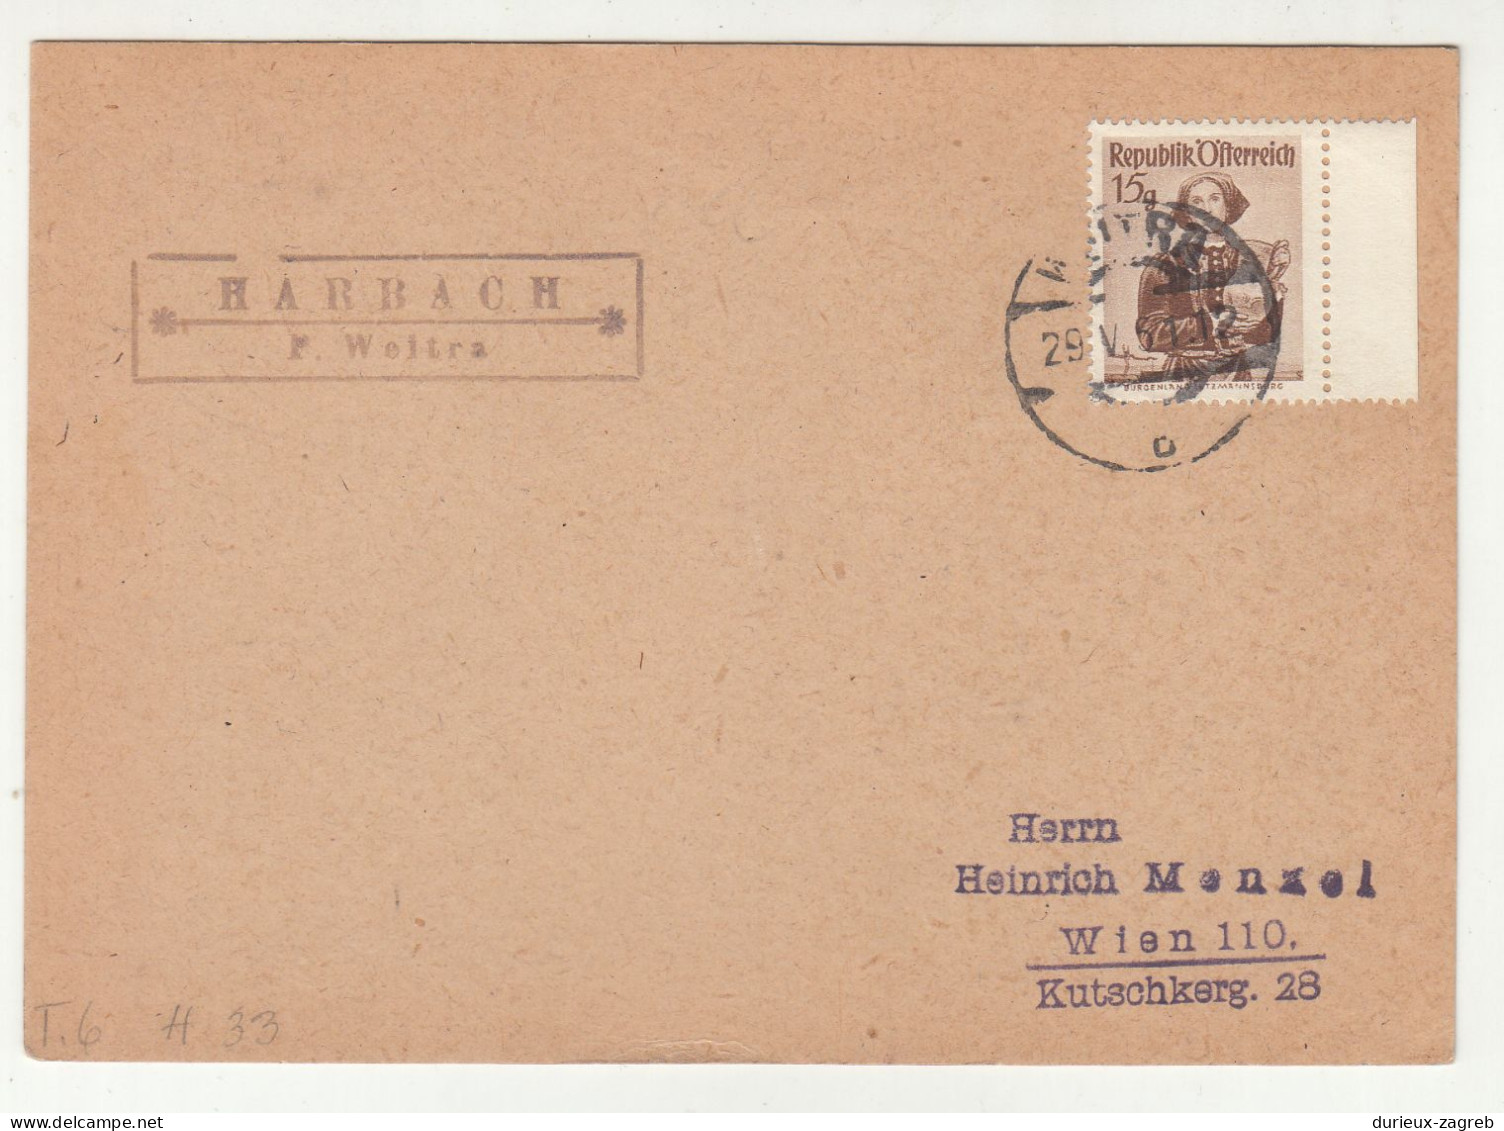 Harbach P. Weitra Mark On Card Posted? 1961 B240401 - Cartas & Documentos